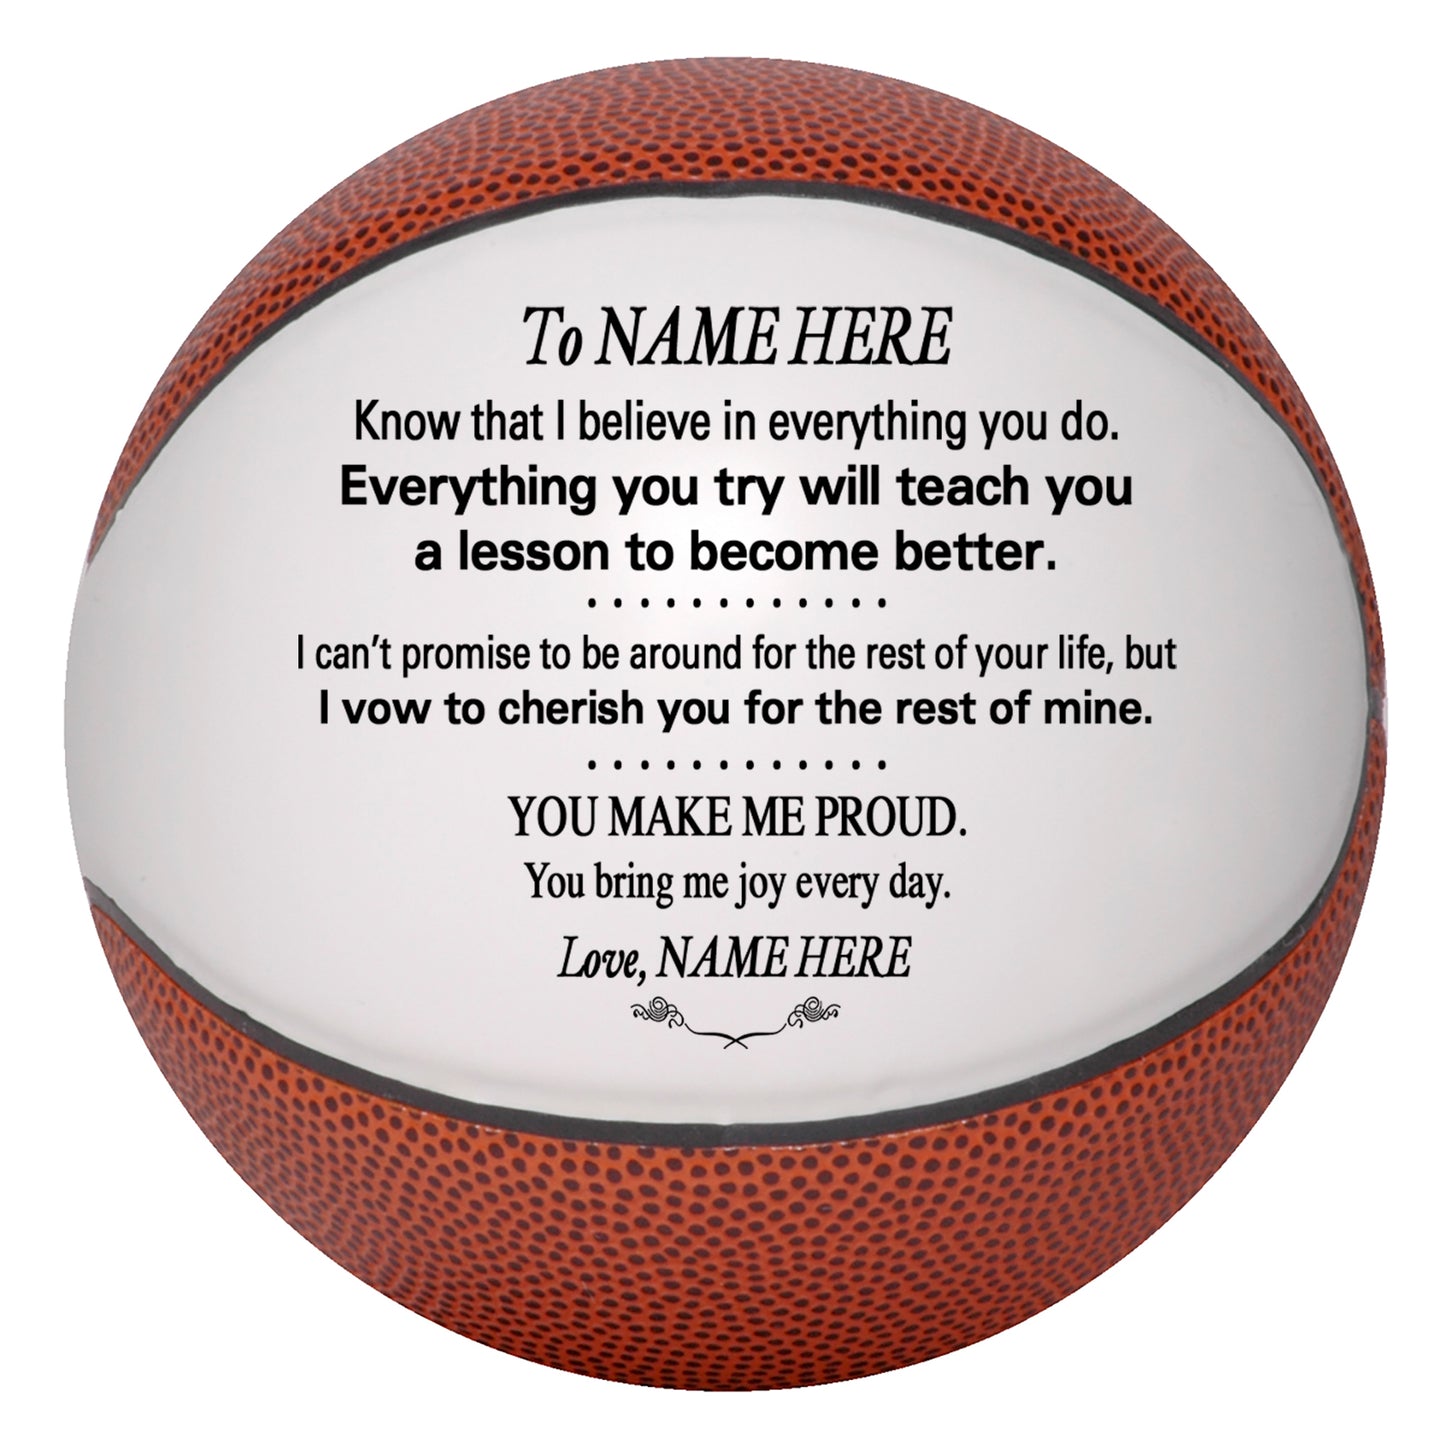 Personalized Grandson Basketball Keepsake - To Our Grandson - To My Grandson - To Our Son - To My Son